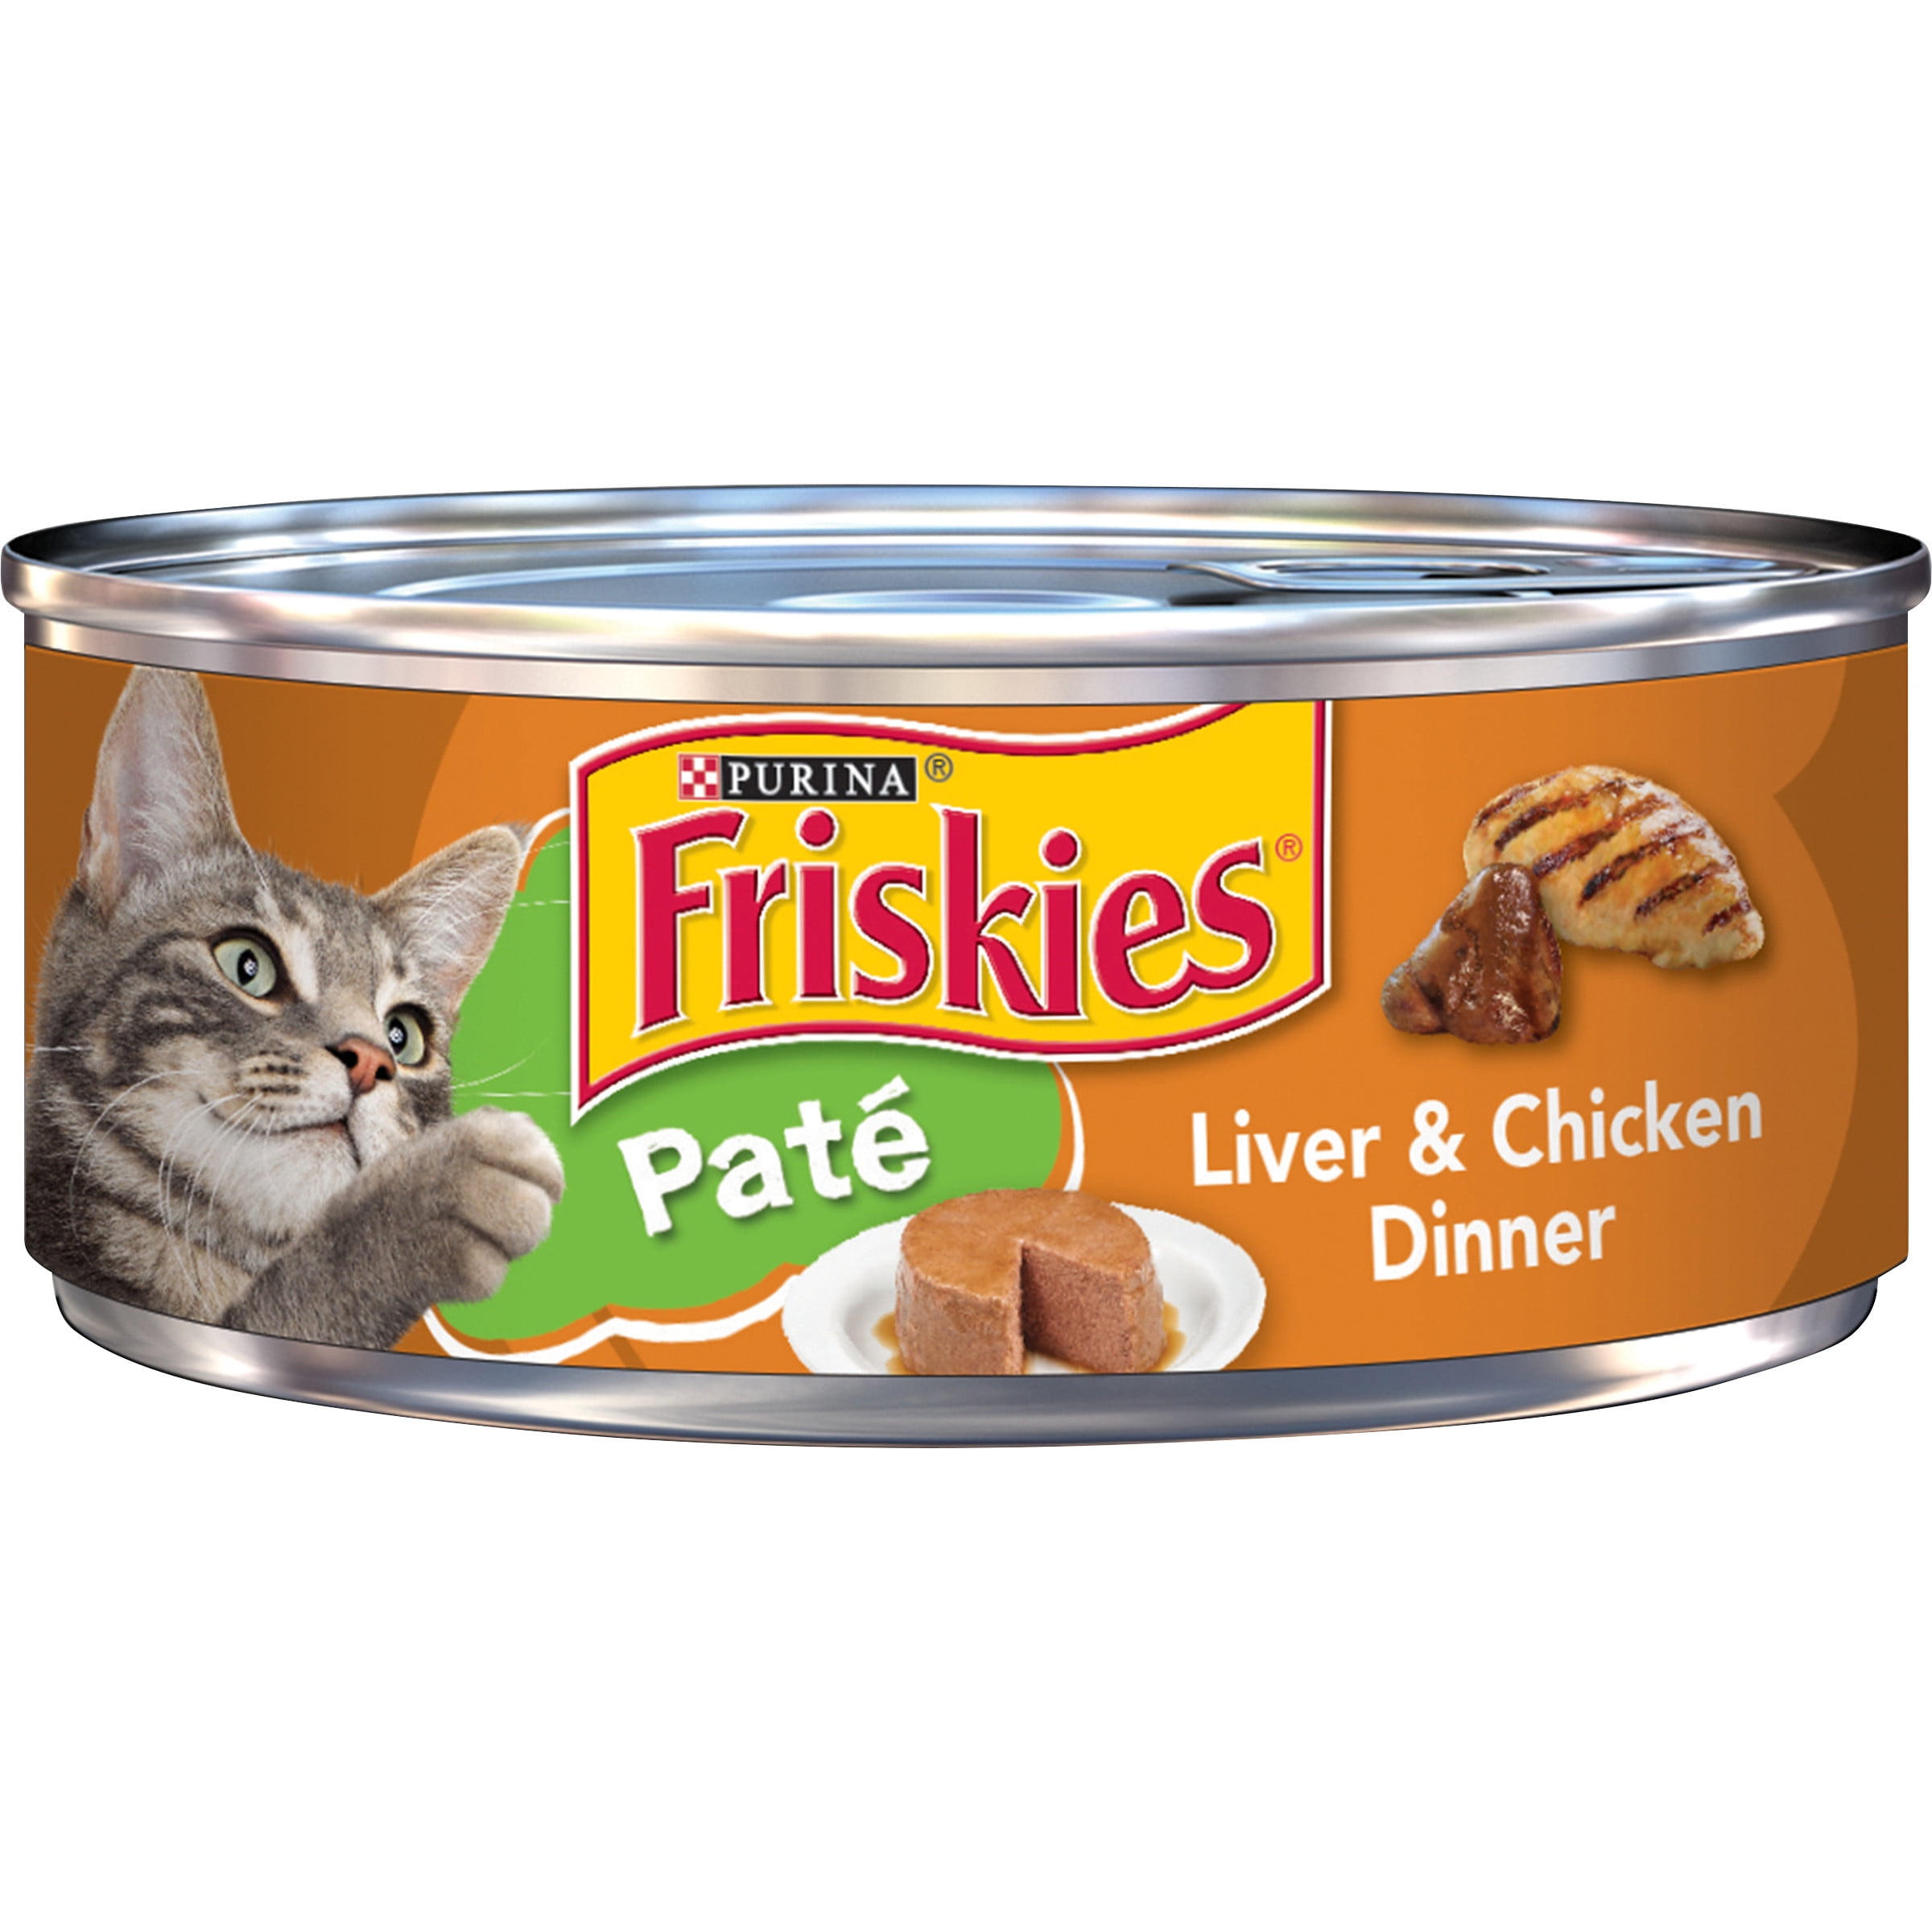 Friskies Liver & Chicken Dinner Pate Wet Cat Food, 5.5 oz Can